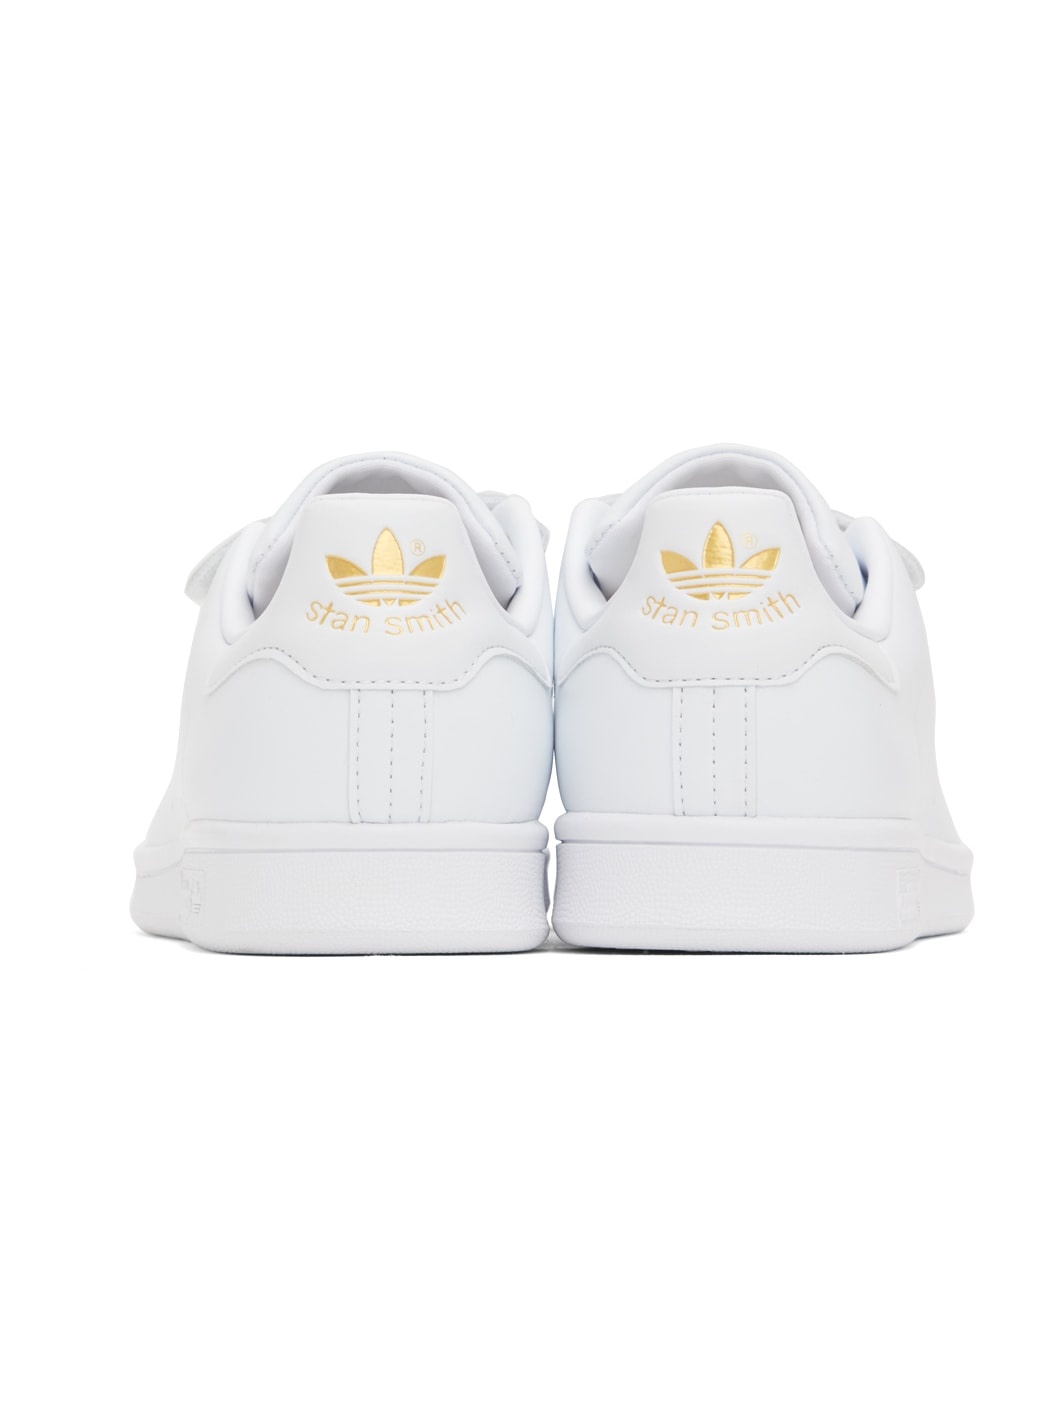 White & Gold Stan Smith Sneakers - 2